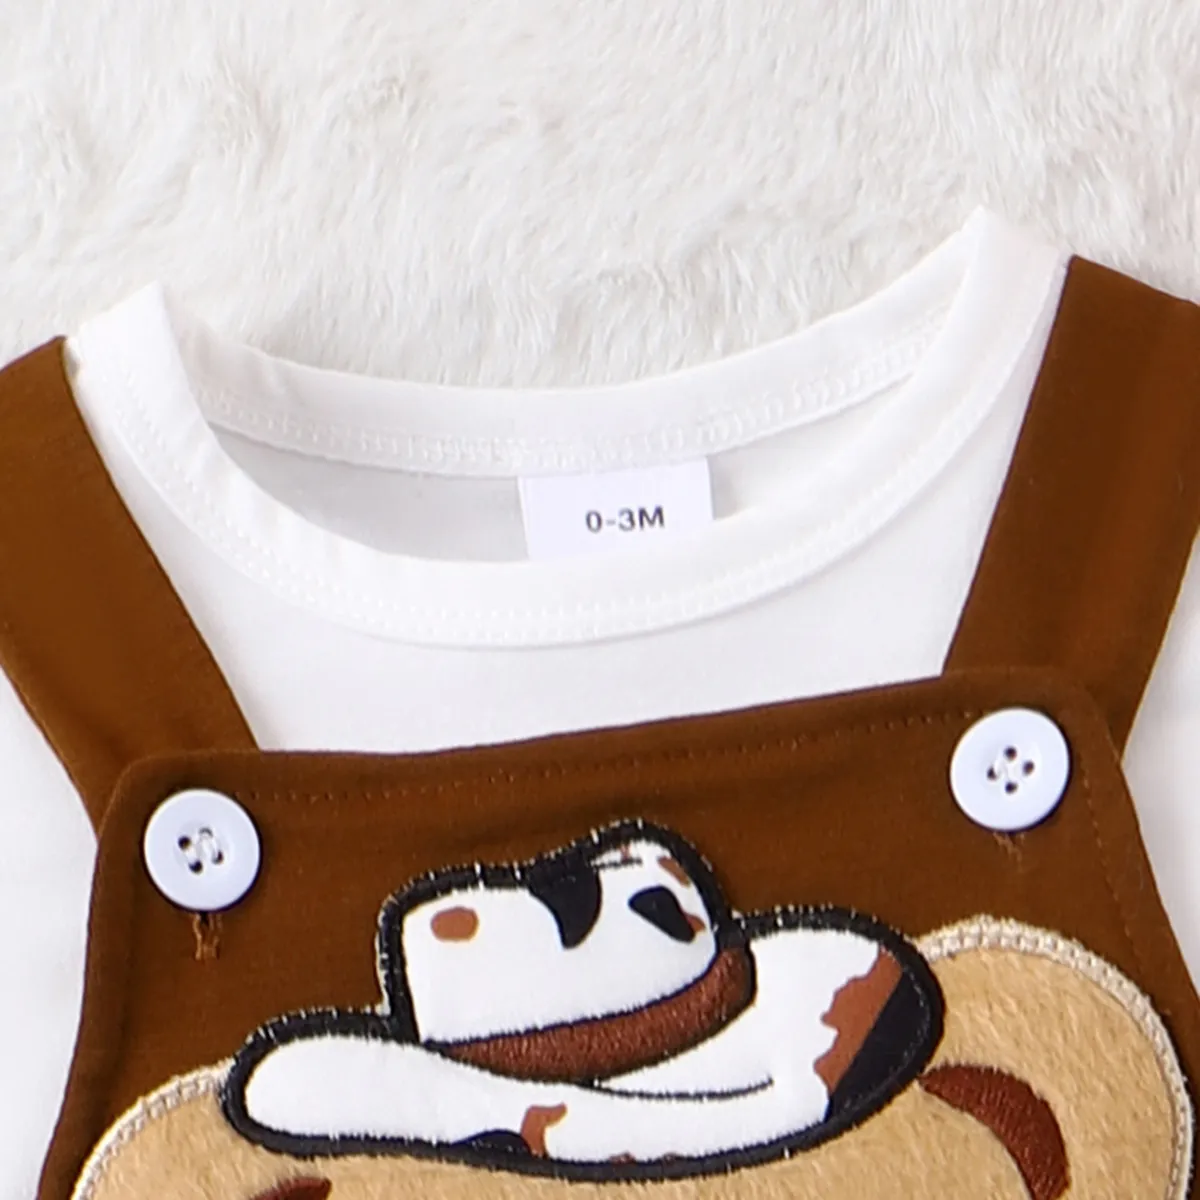 Spotted Bear Hat Set 2pcs for Baby Girl - Childlike Animal Pattern Brown big image 1